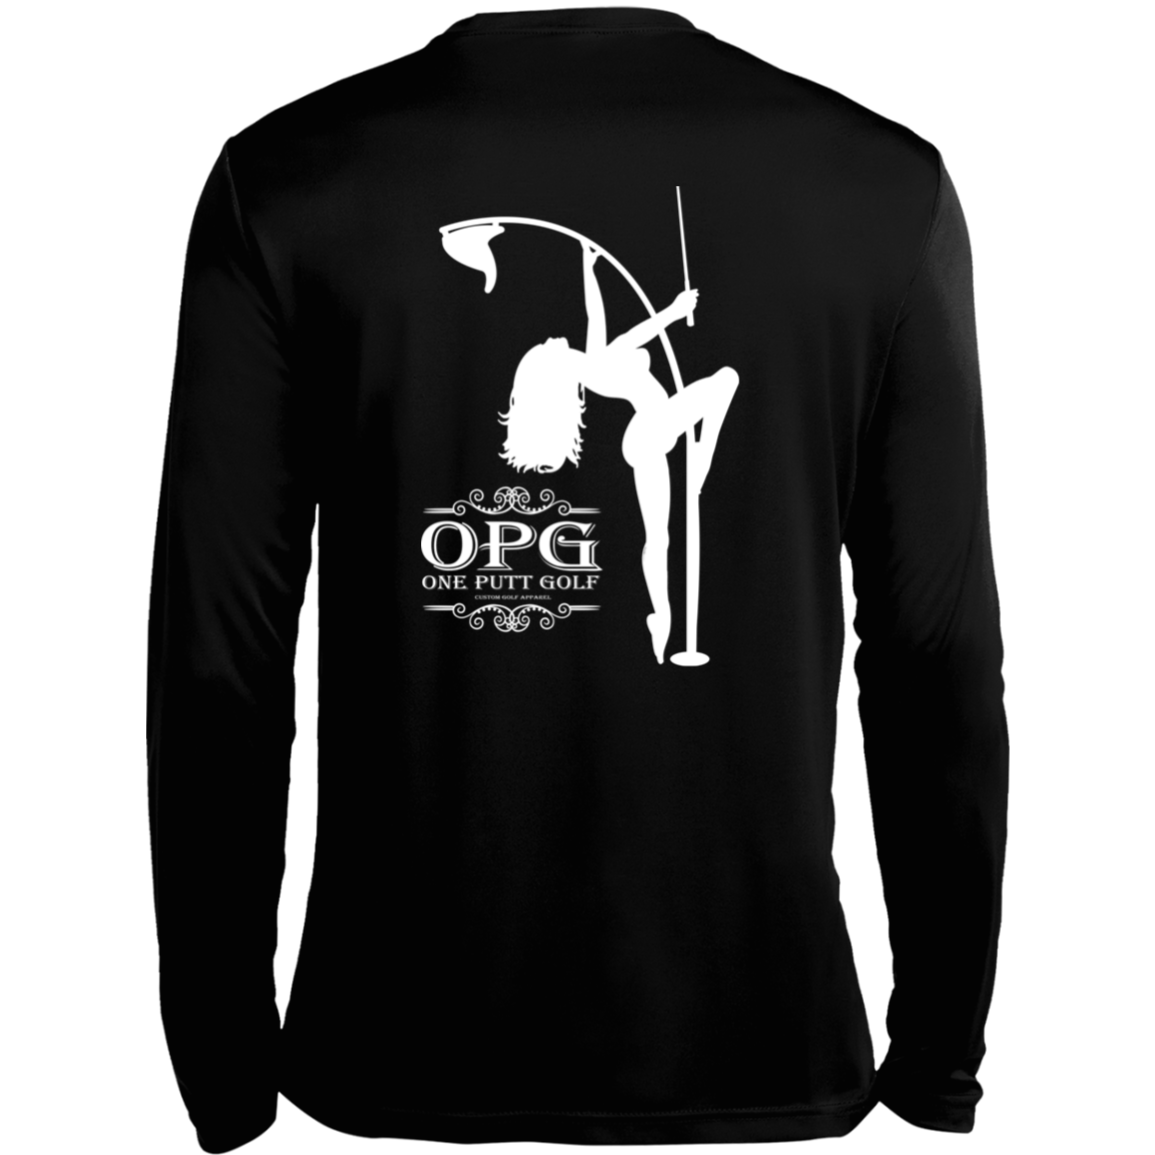 OPG Custom Design #10. Flag Pole. 100% Polyester Moisture-Wicking Tee